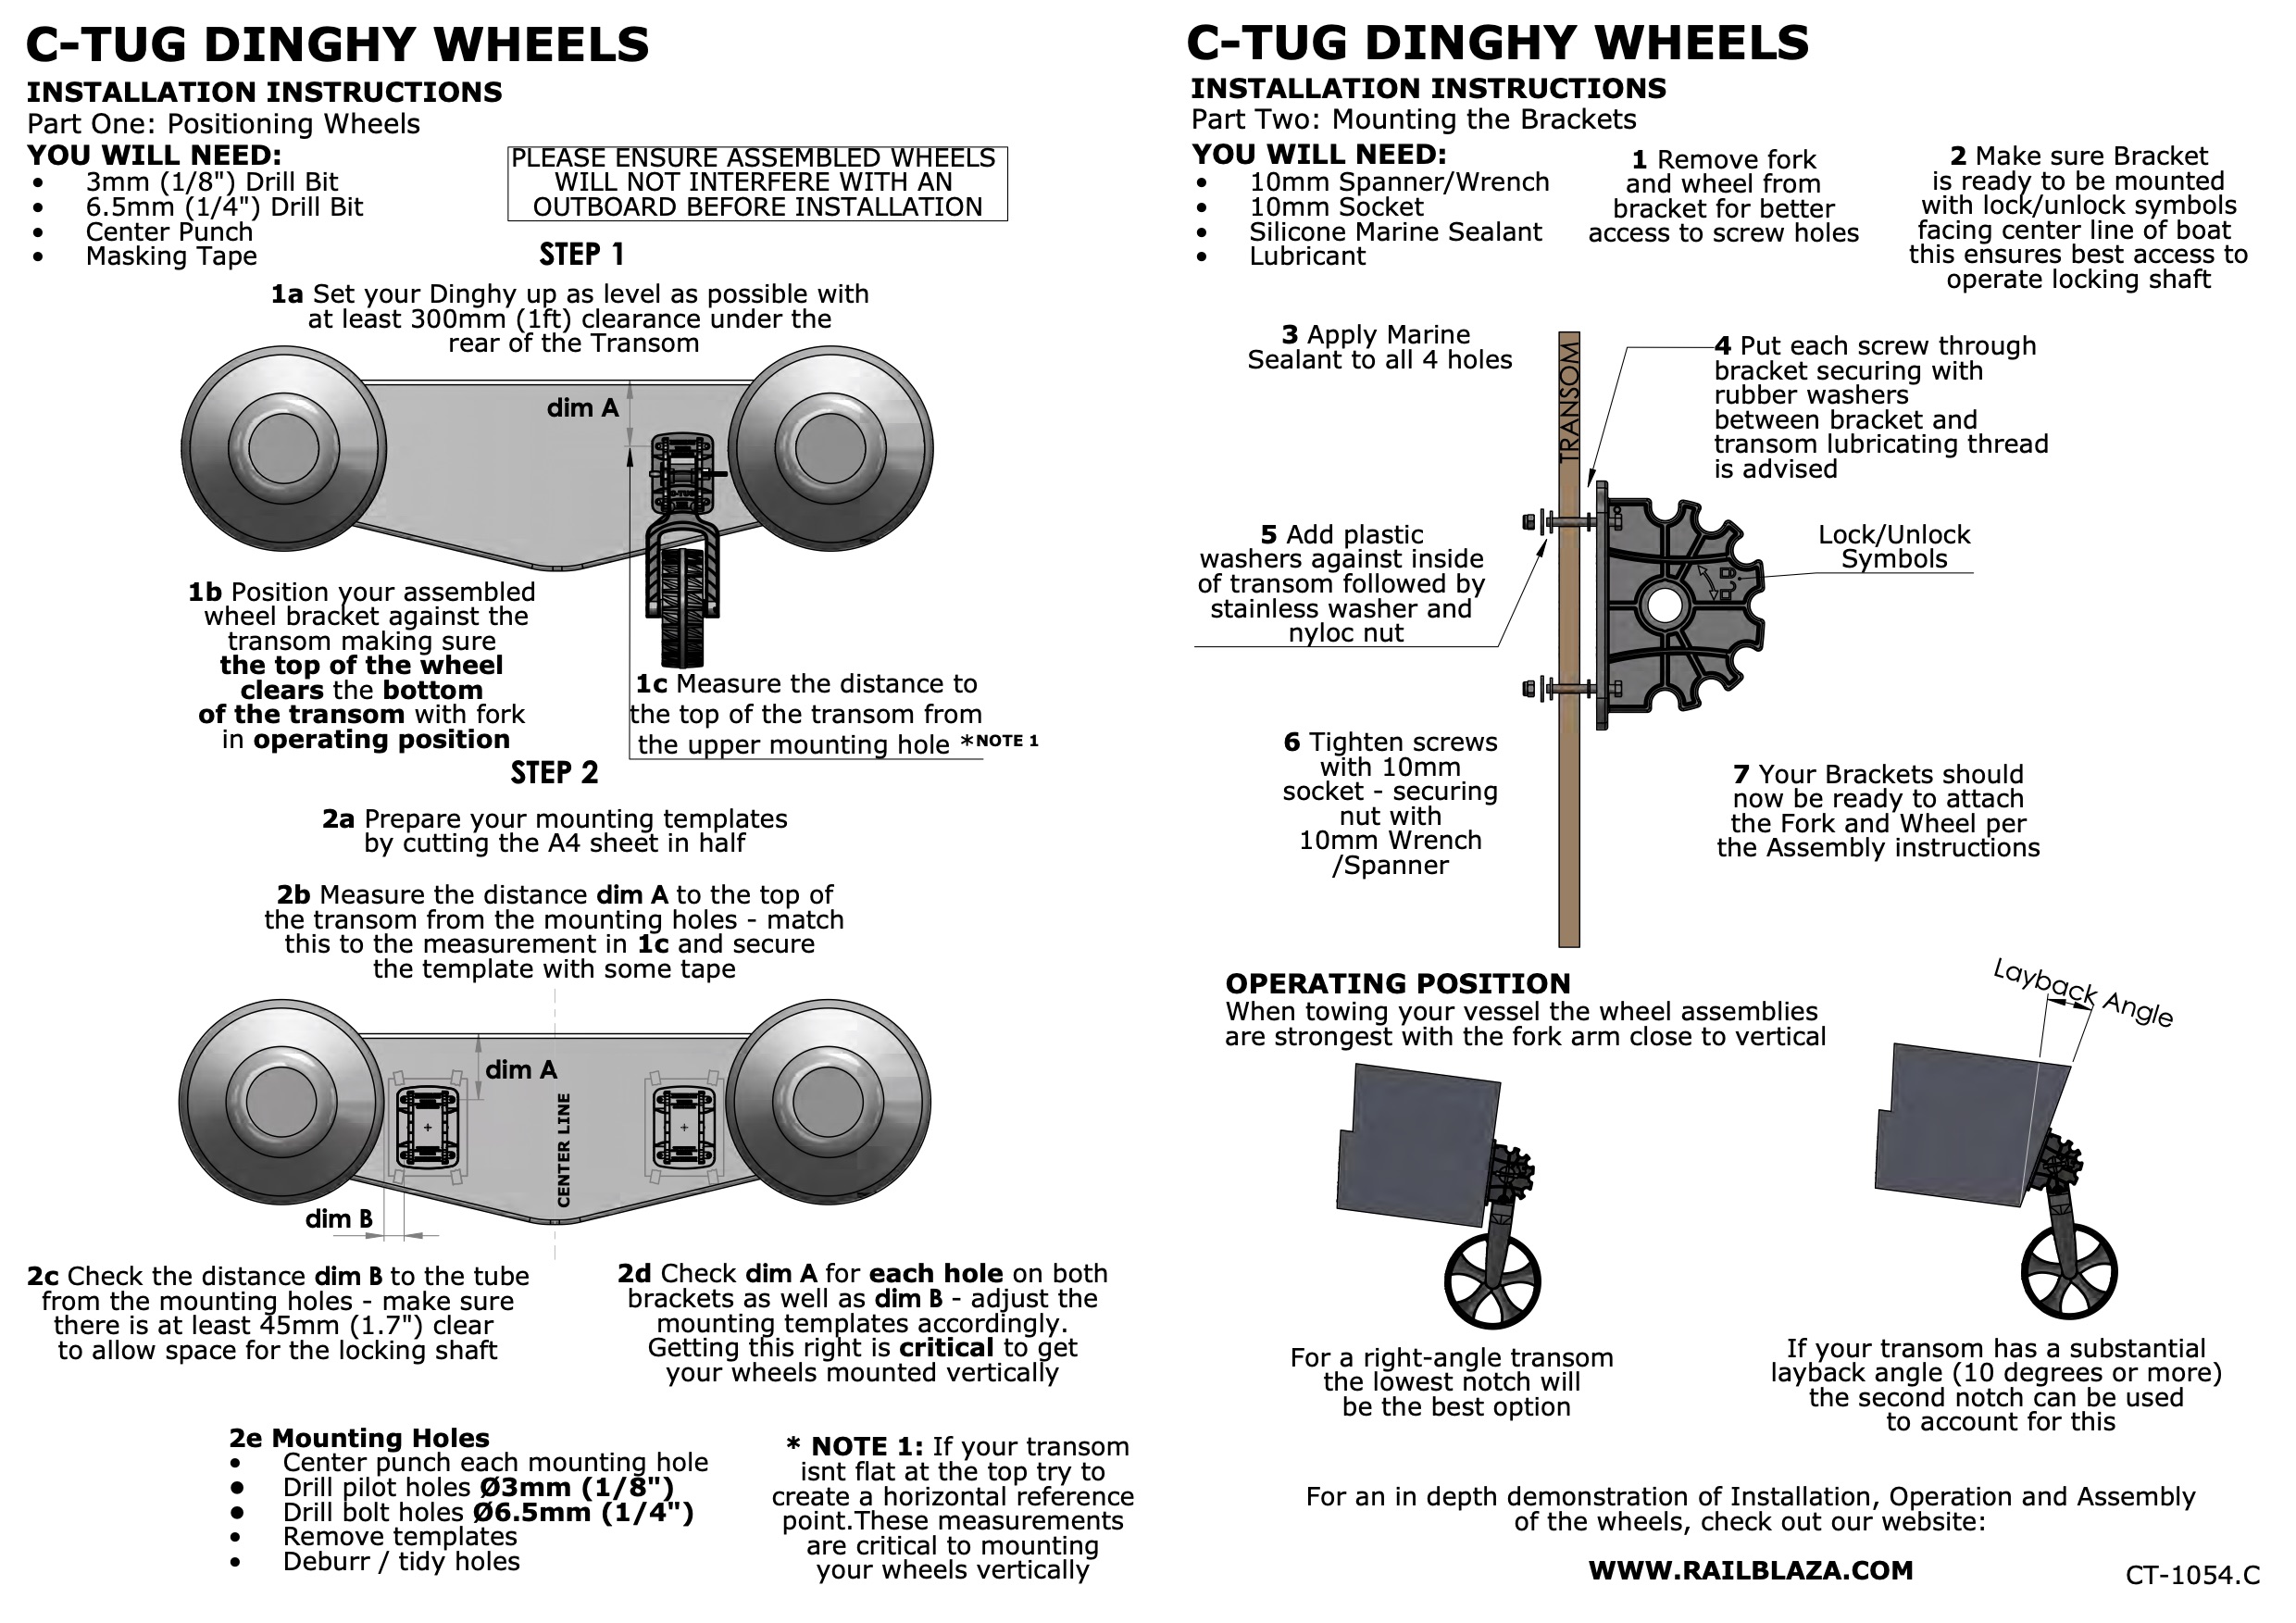 C-Tug-Dinghy-Wheels-RAILBLAZA-C-Tug-Dinghy-Wheel-Assembly-and-Installation-Instructions-12812_120136.jpg